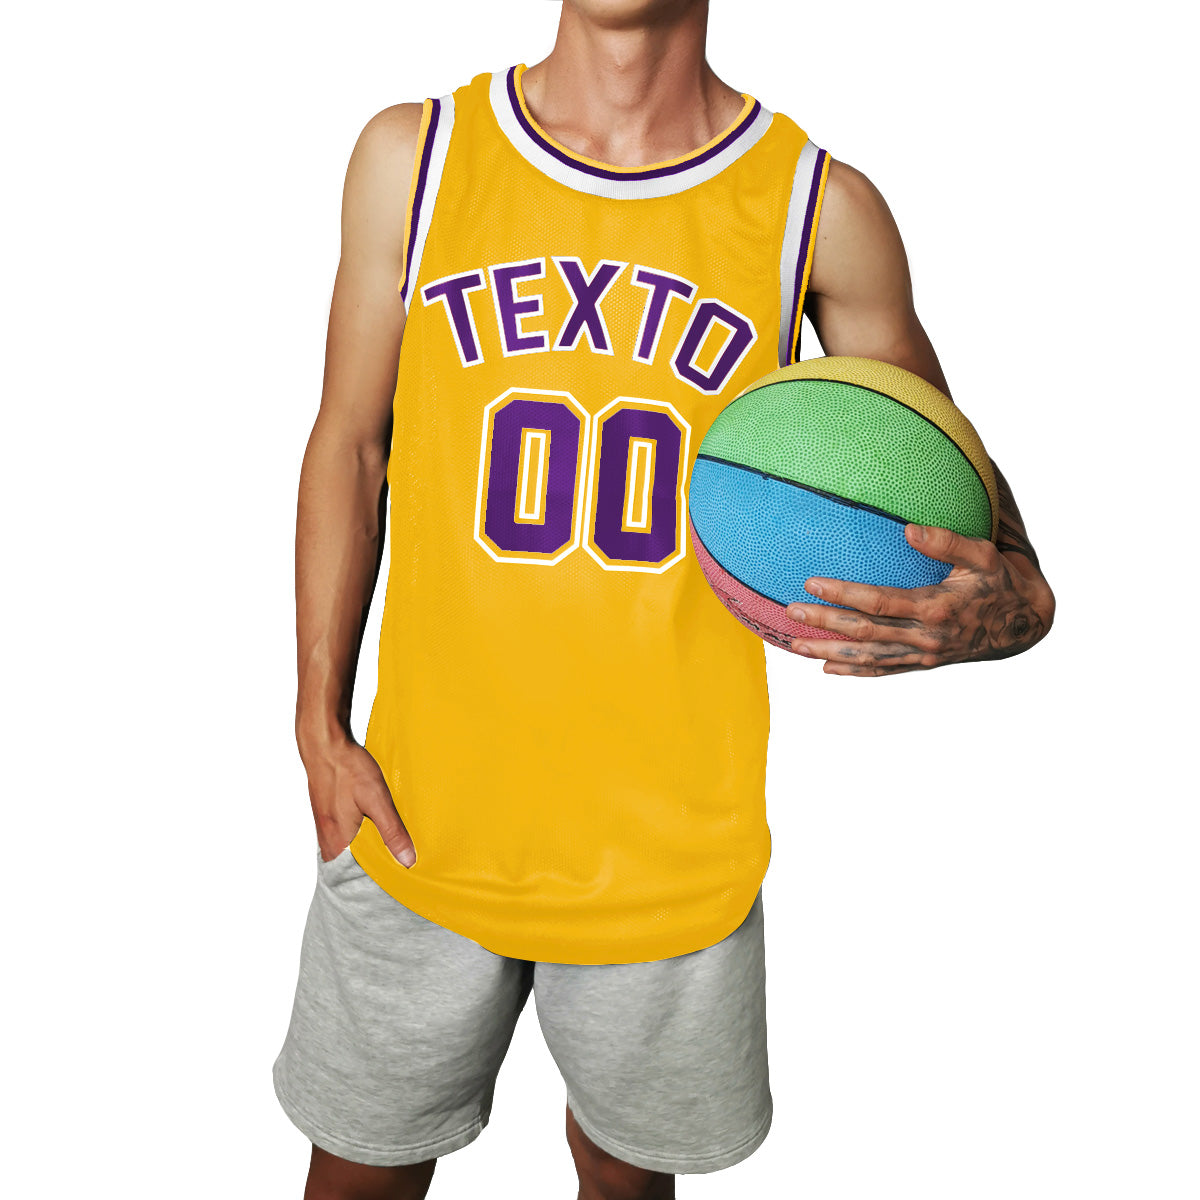 jersey basquetbol amarillo personalizable